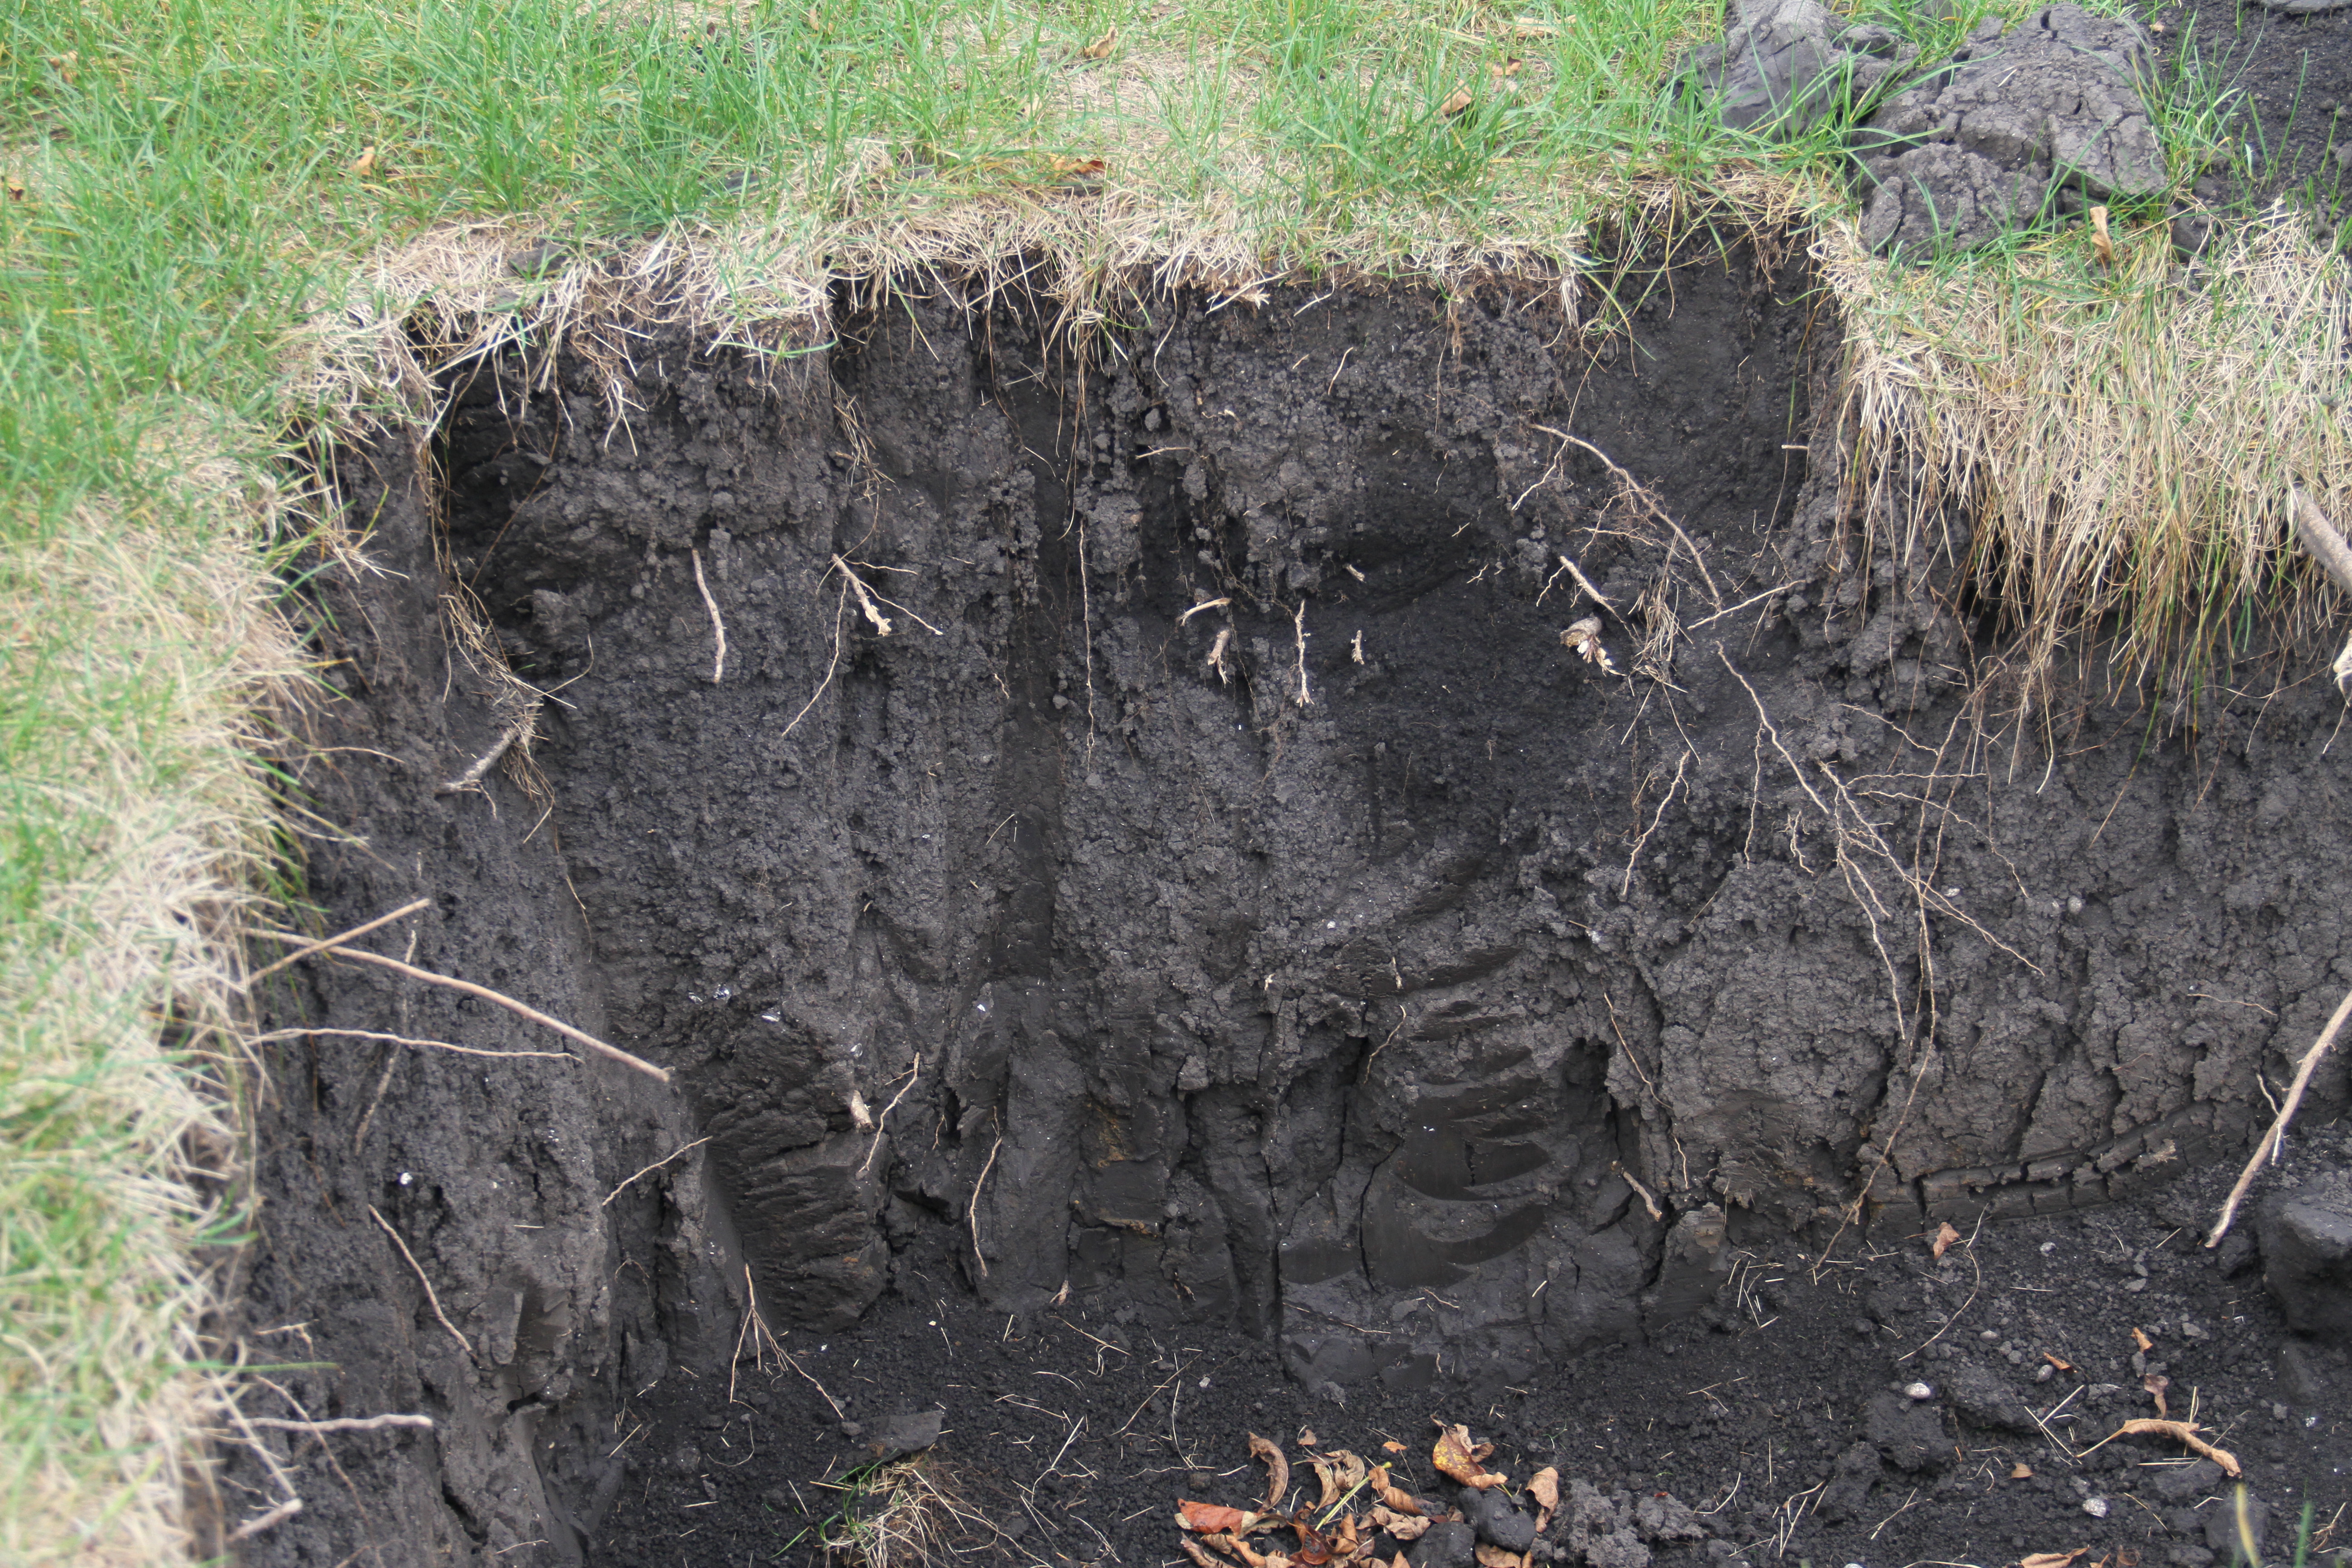 Let's talk dirt! That's soil to gardners.